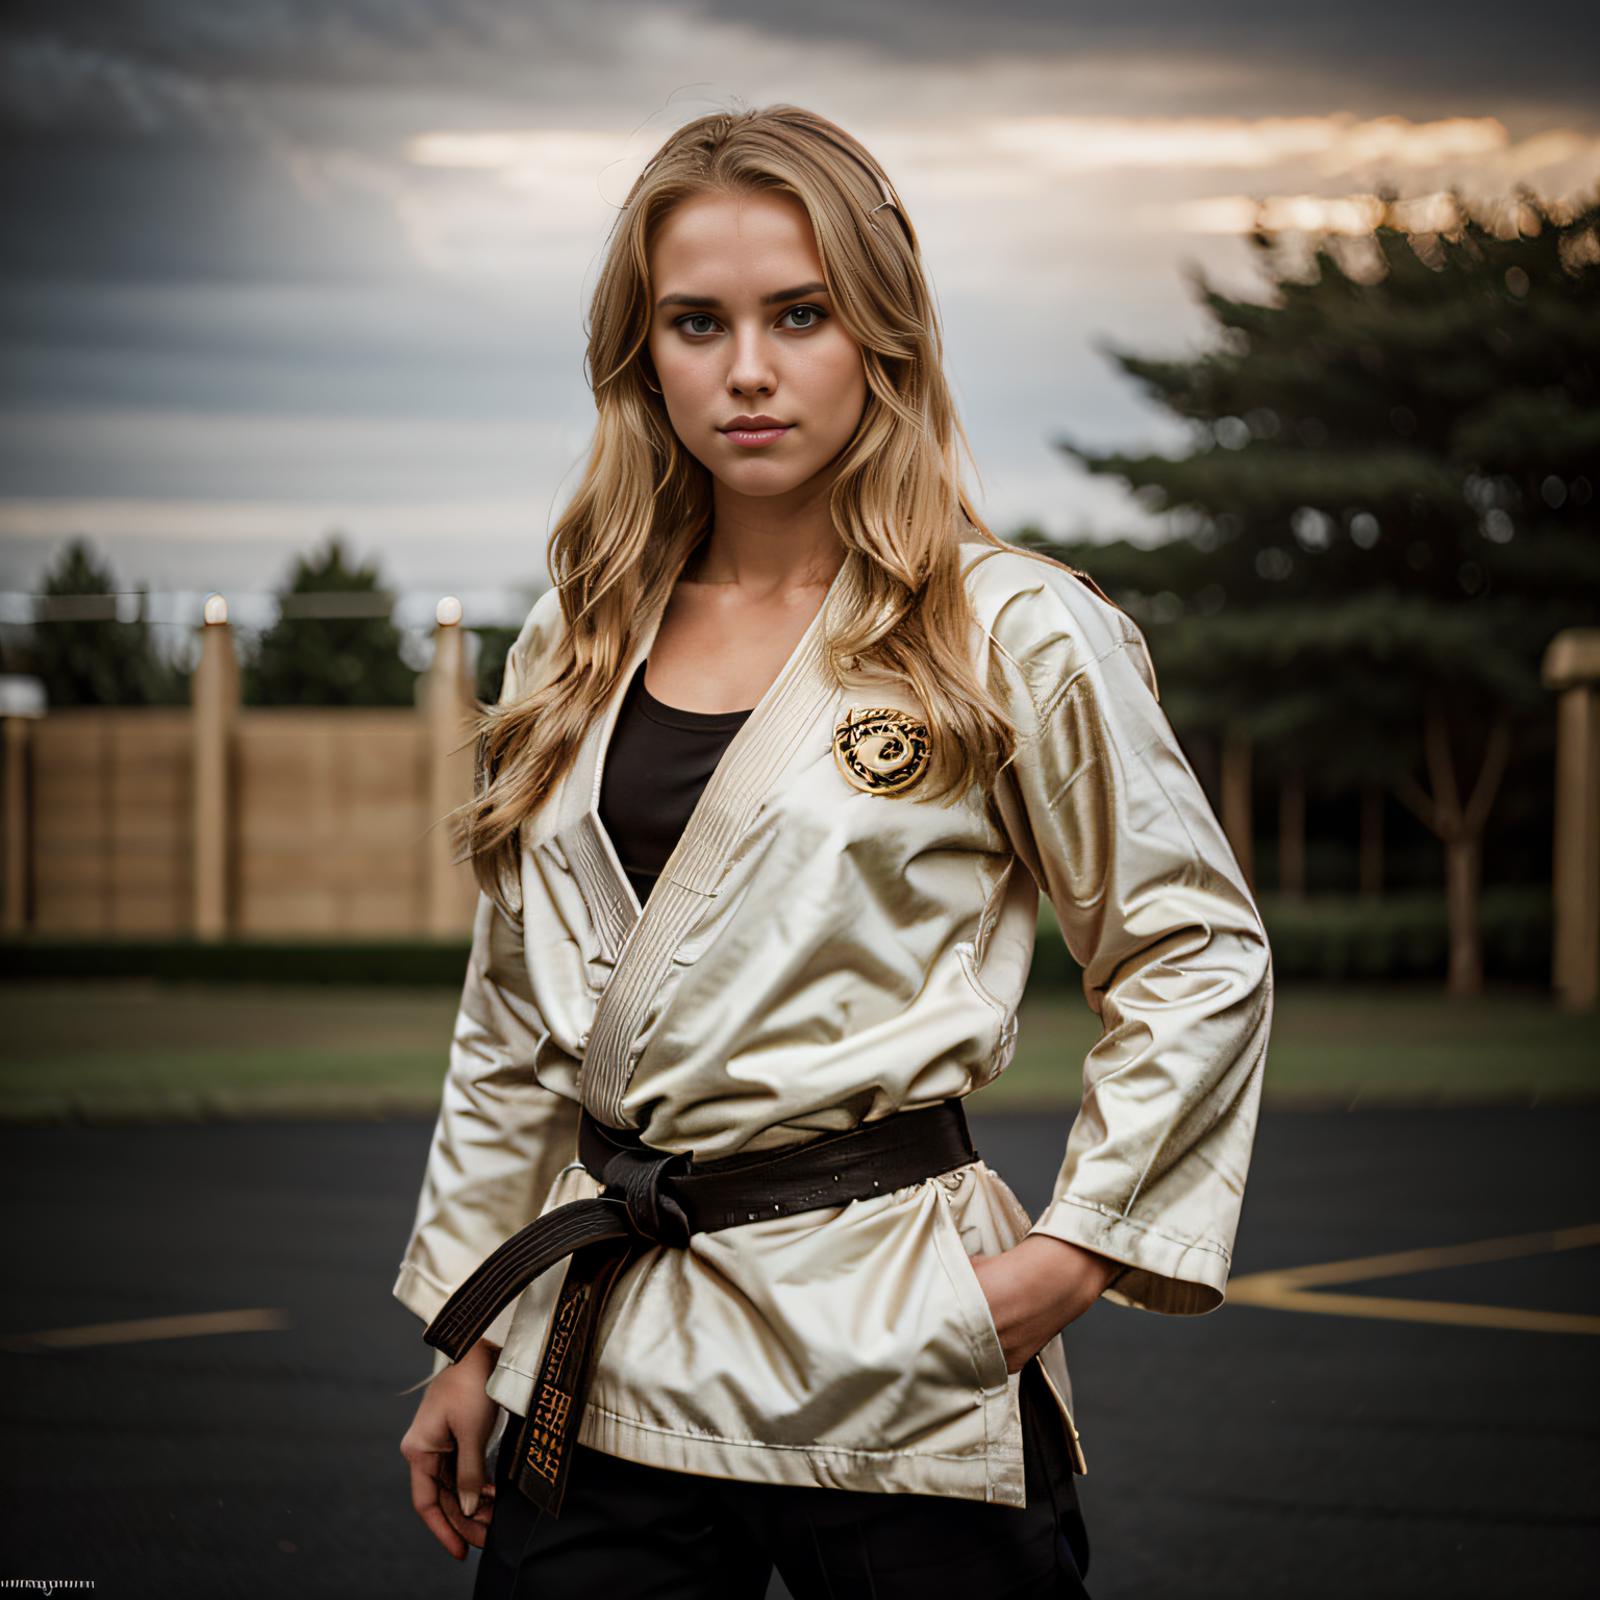 A beautiful woman wearing a gold karate uniform standing in a parking lot.